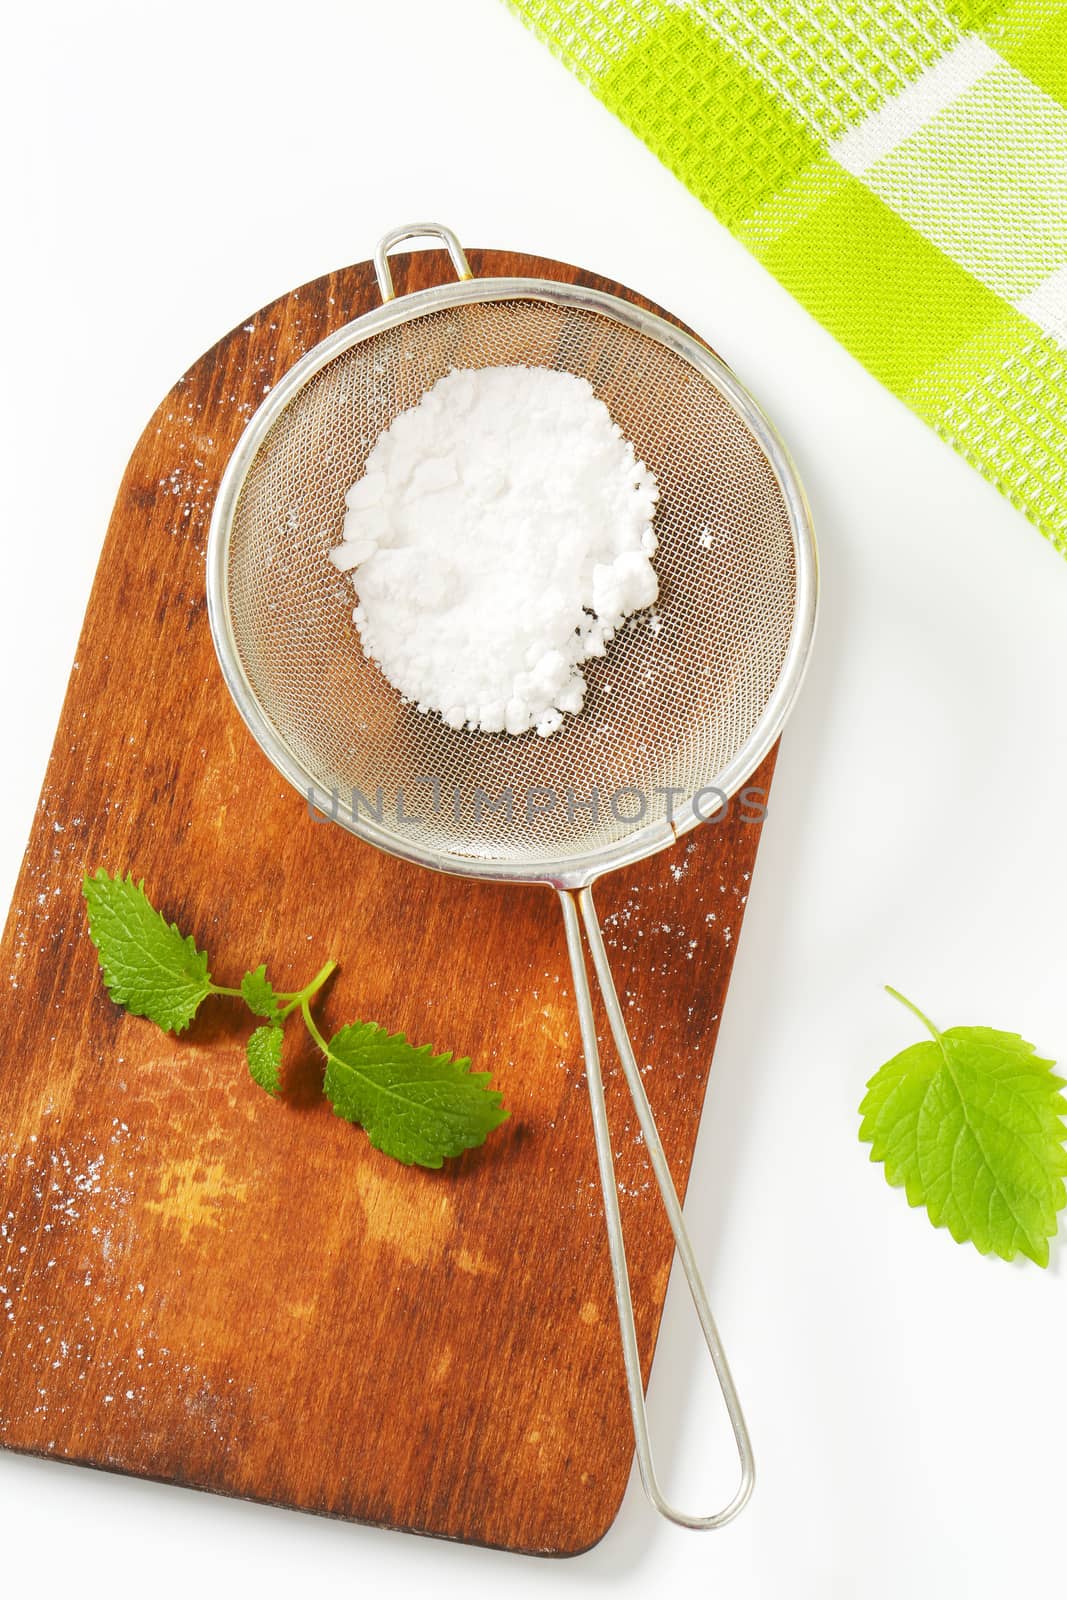 Powdered sugar in a sieve by Digifoodstock